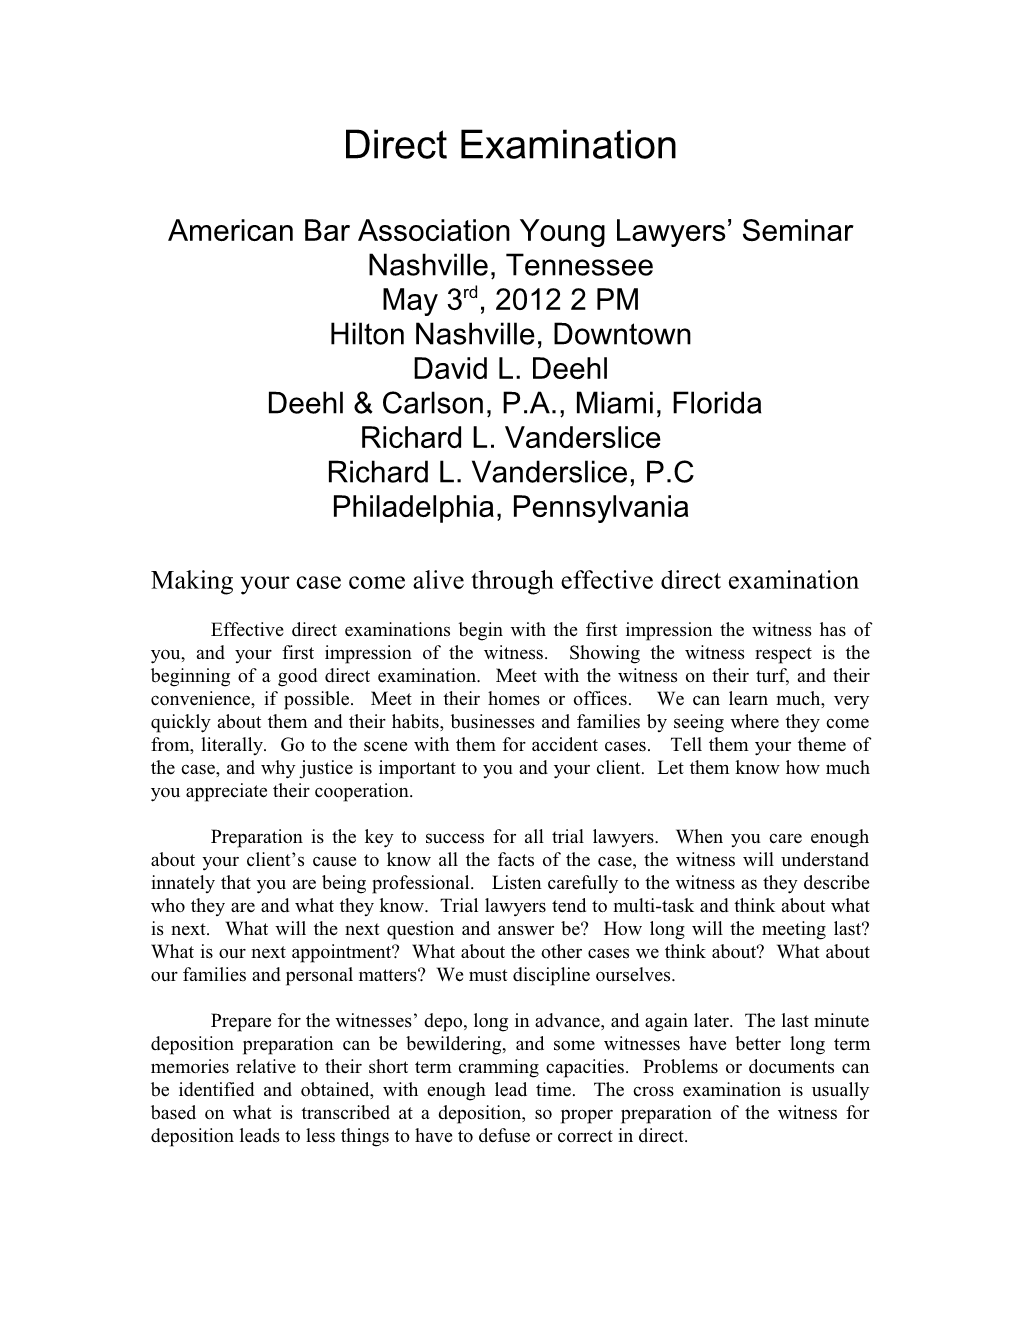 American Bar Association Young Lawyers Seminar